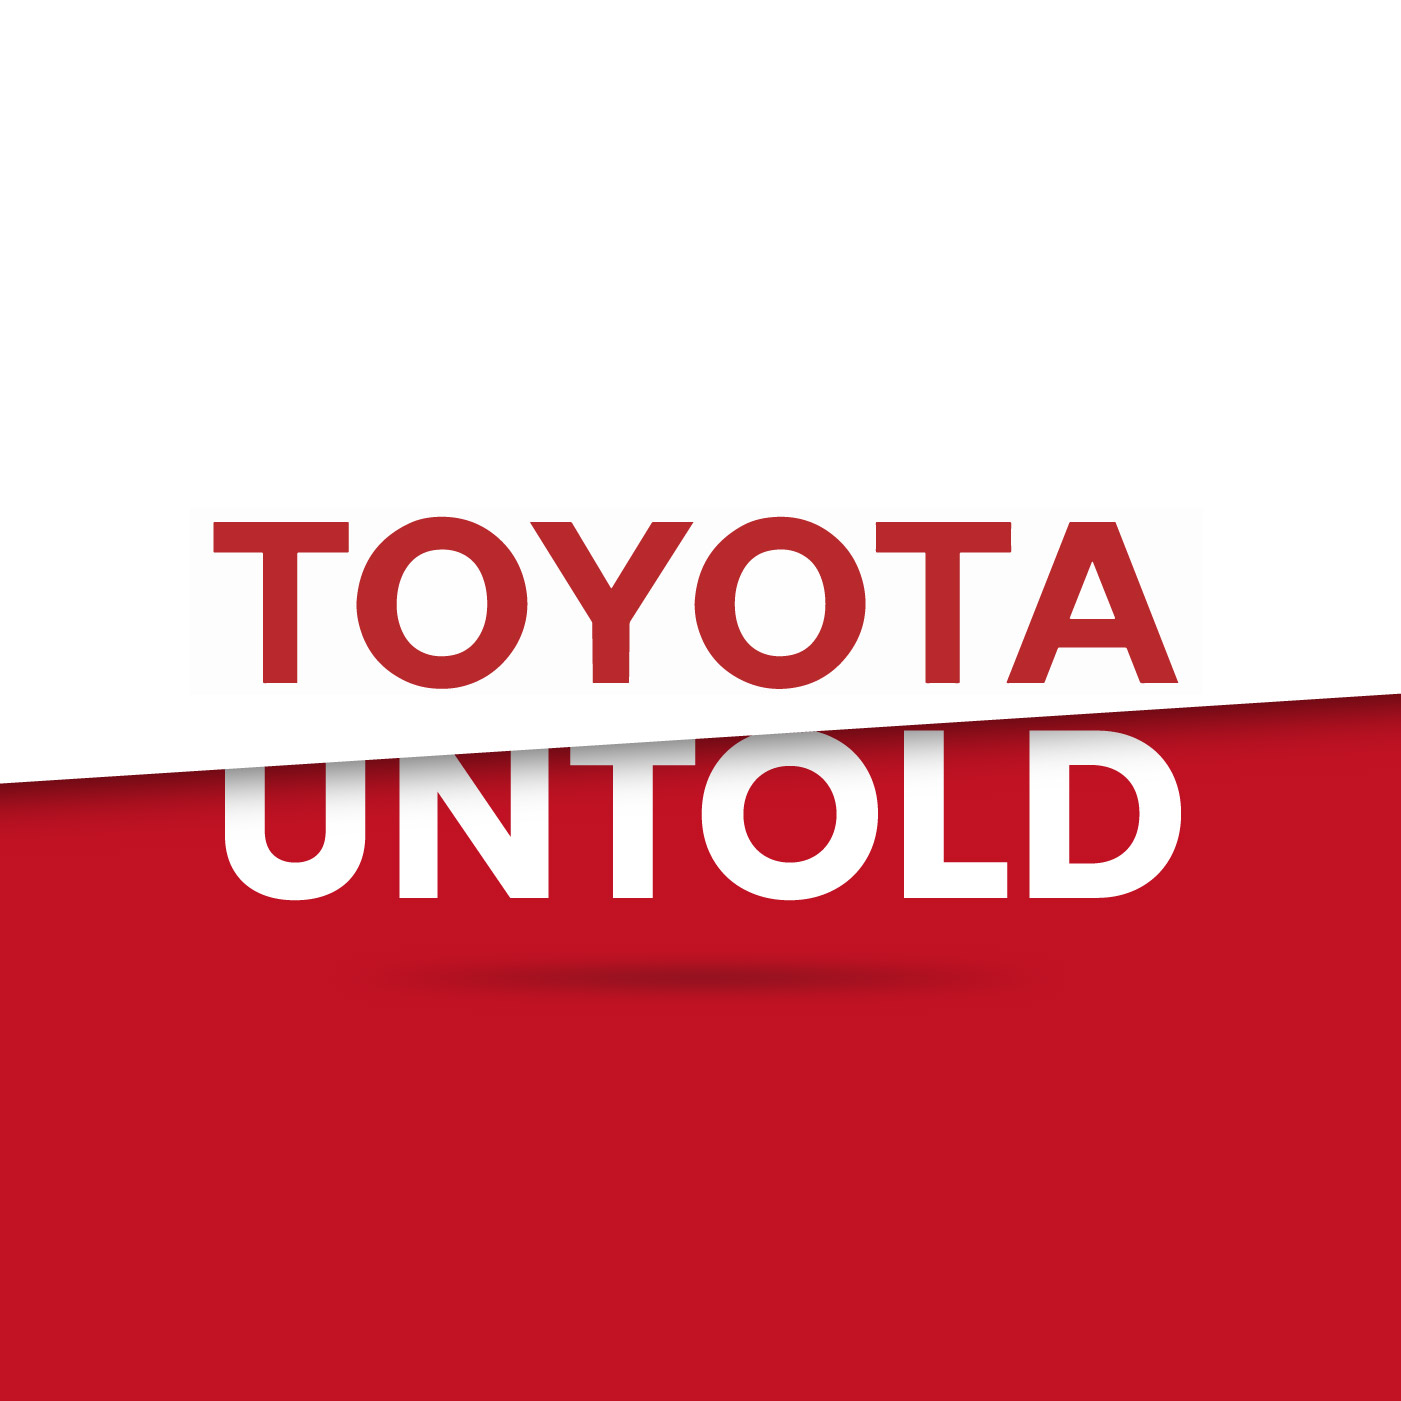 Artwork for Toyota Untold